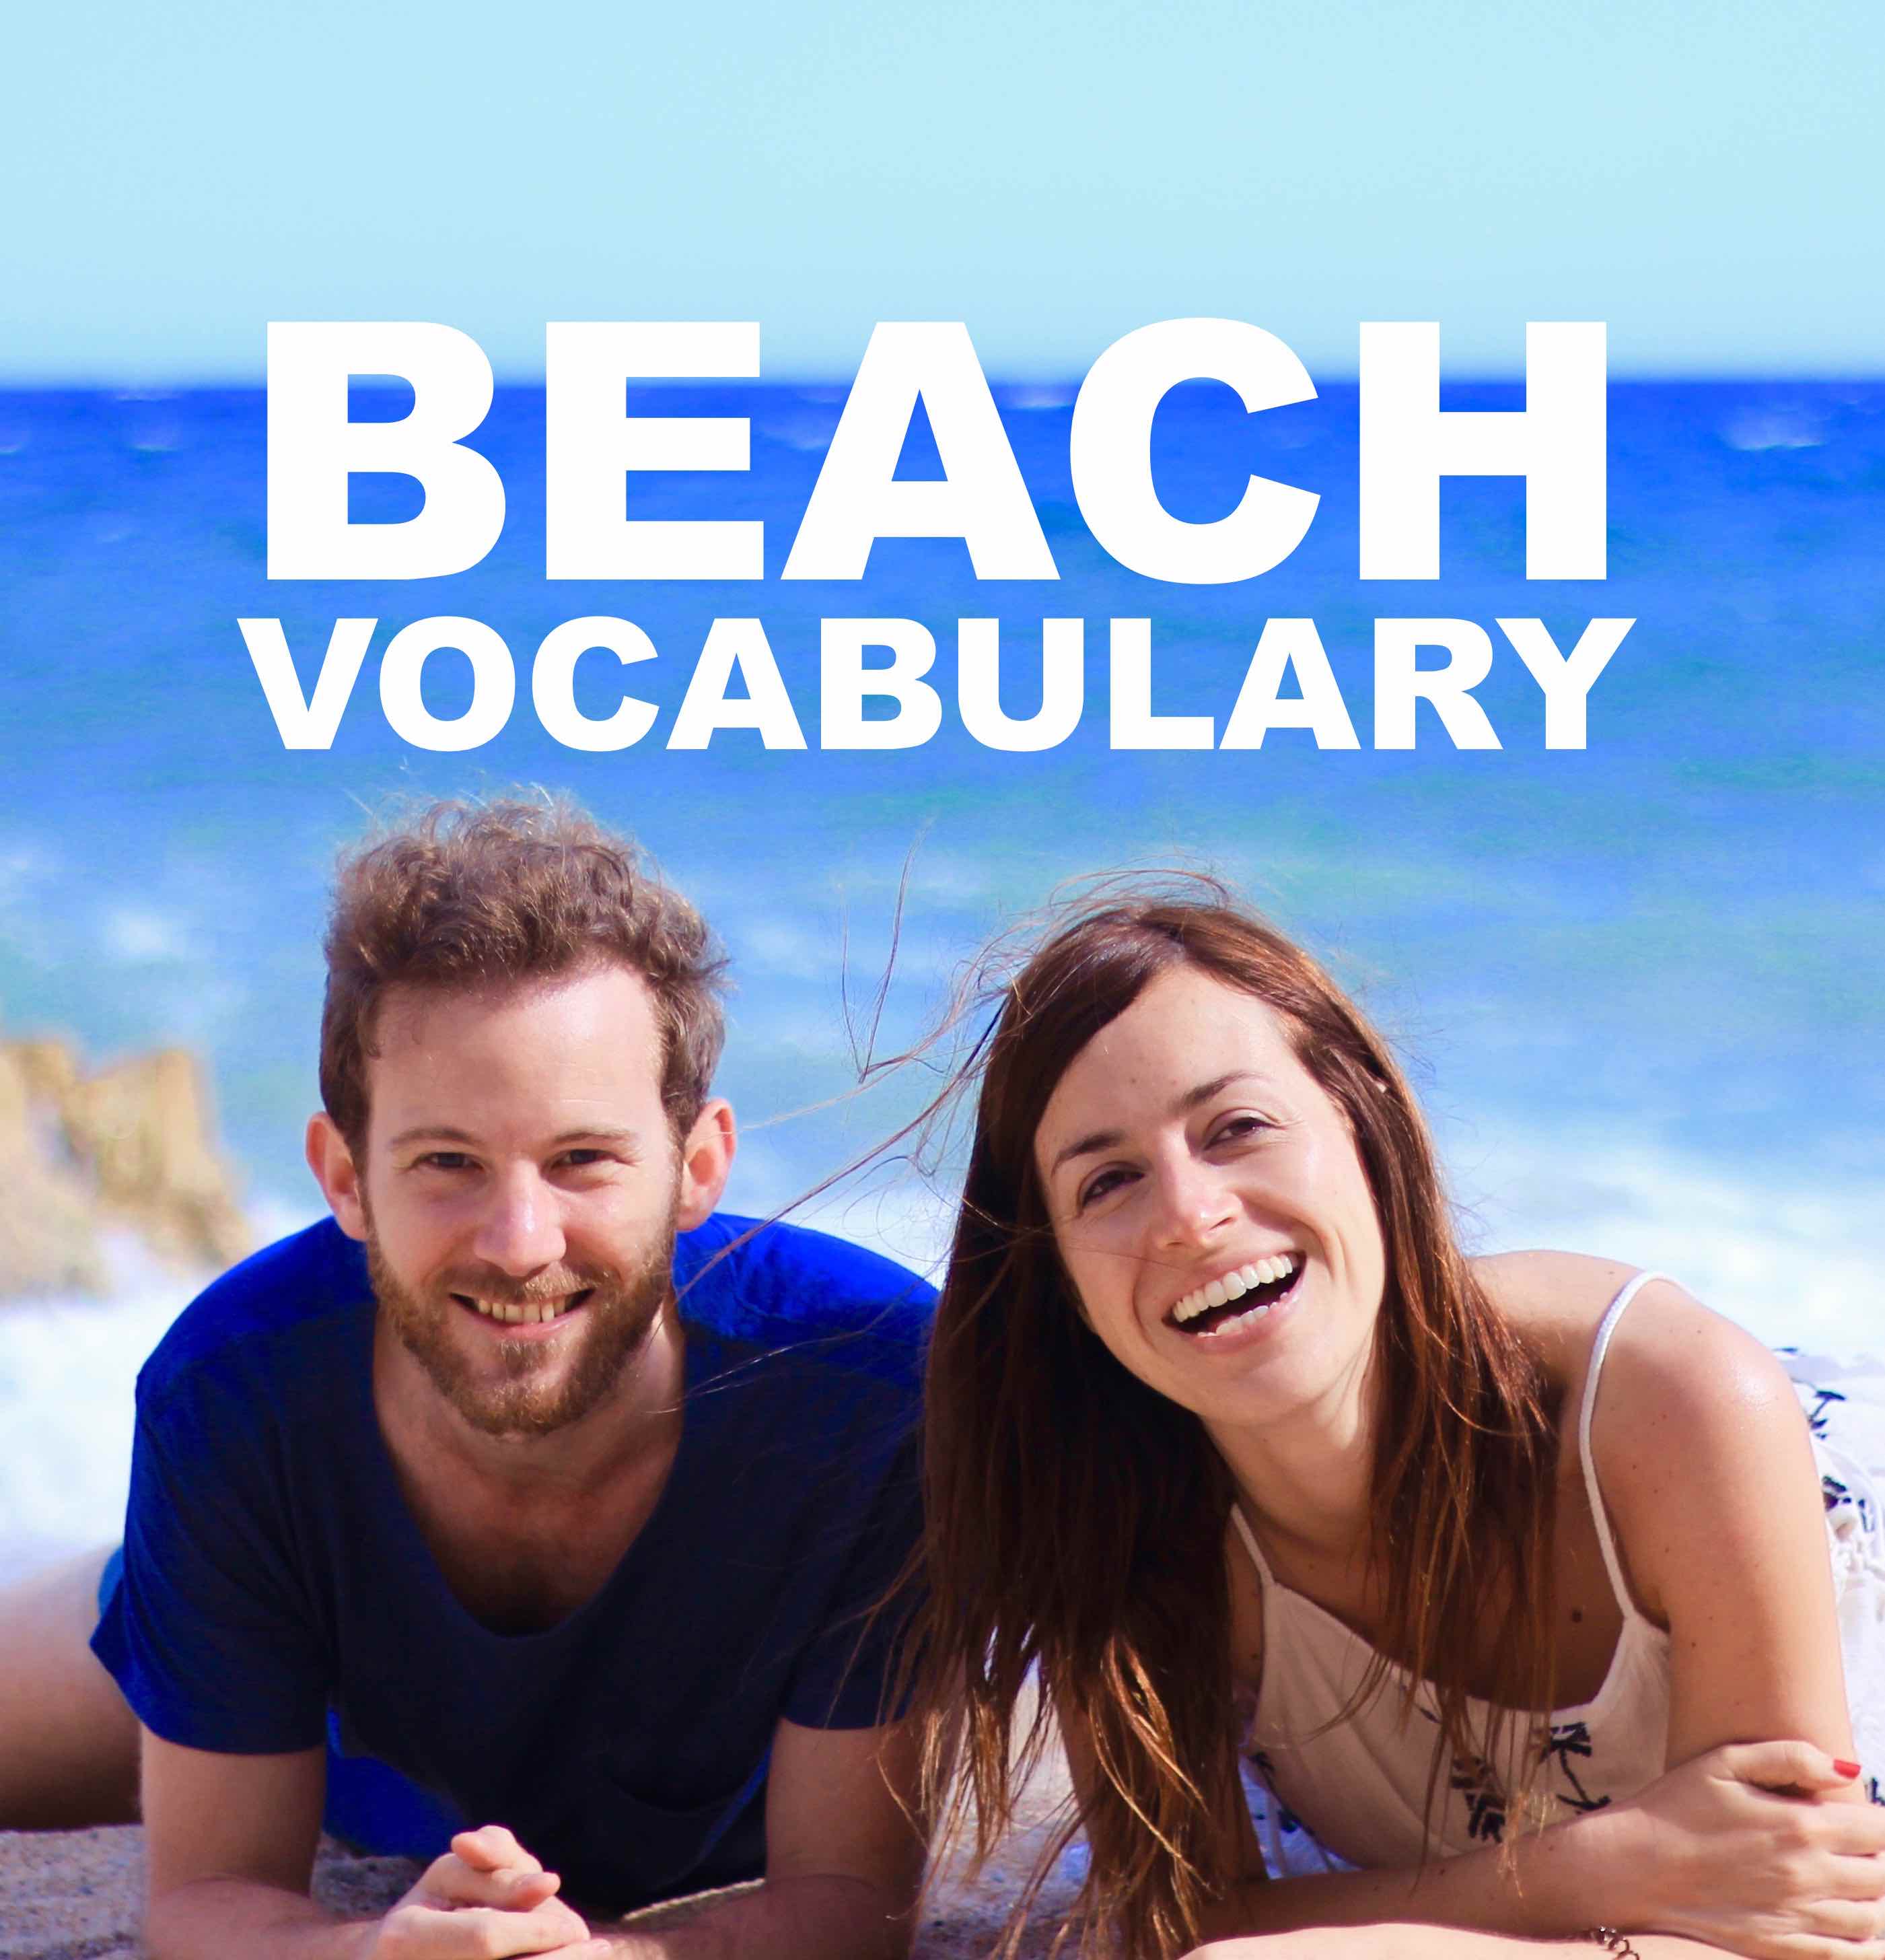 Beach Vocabulary in English